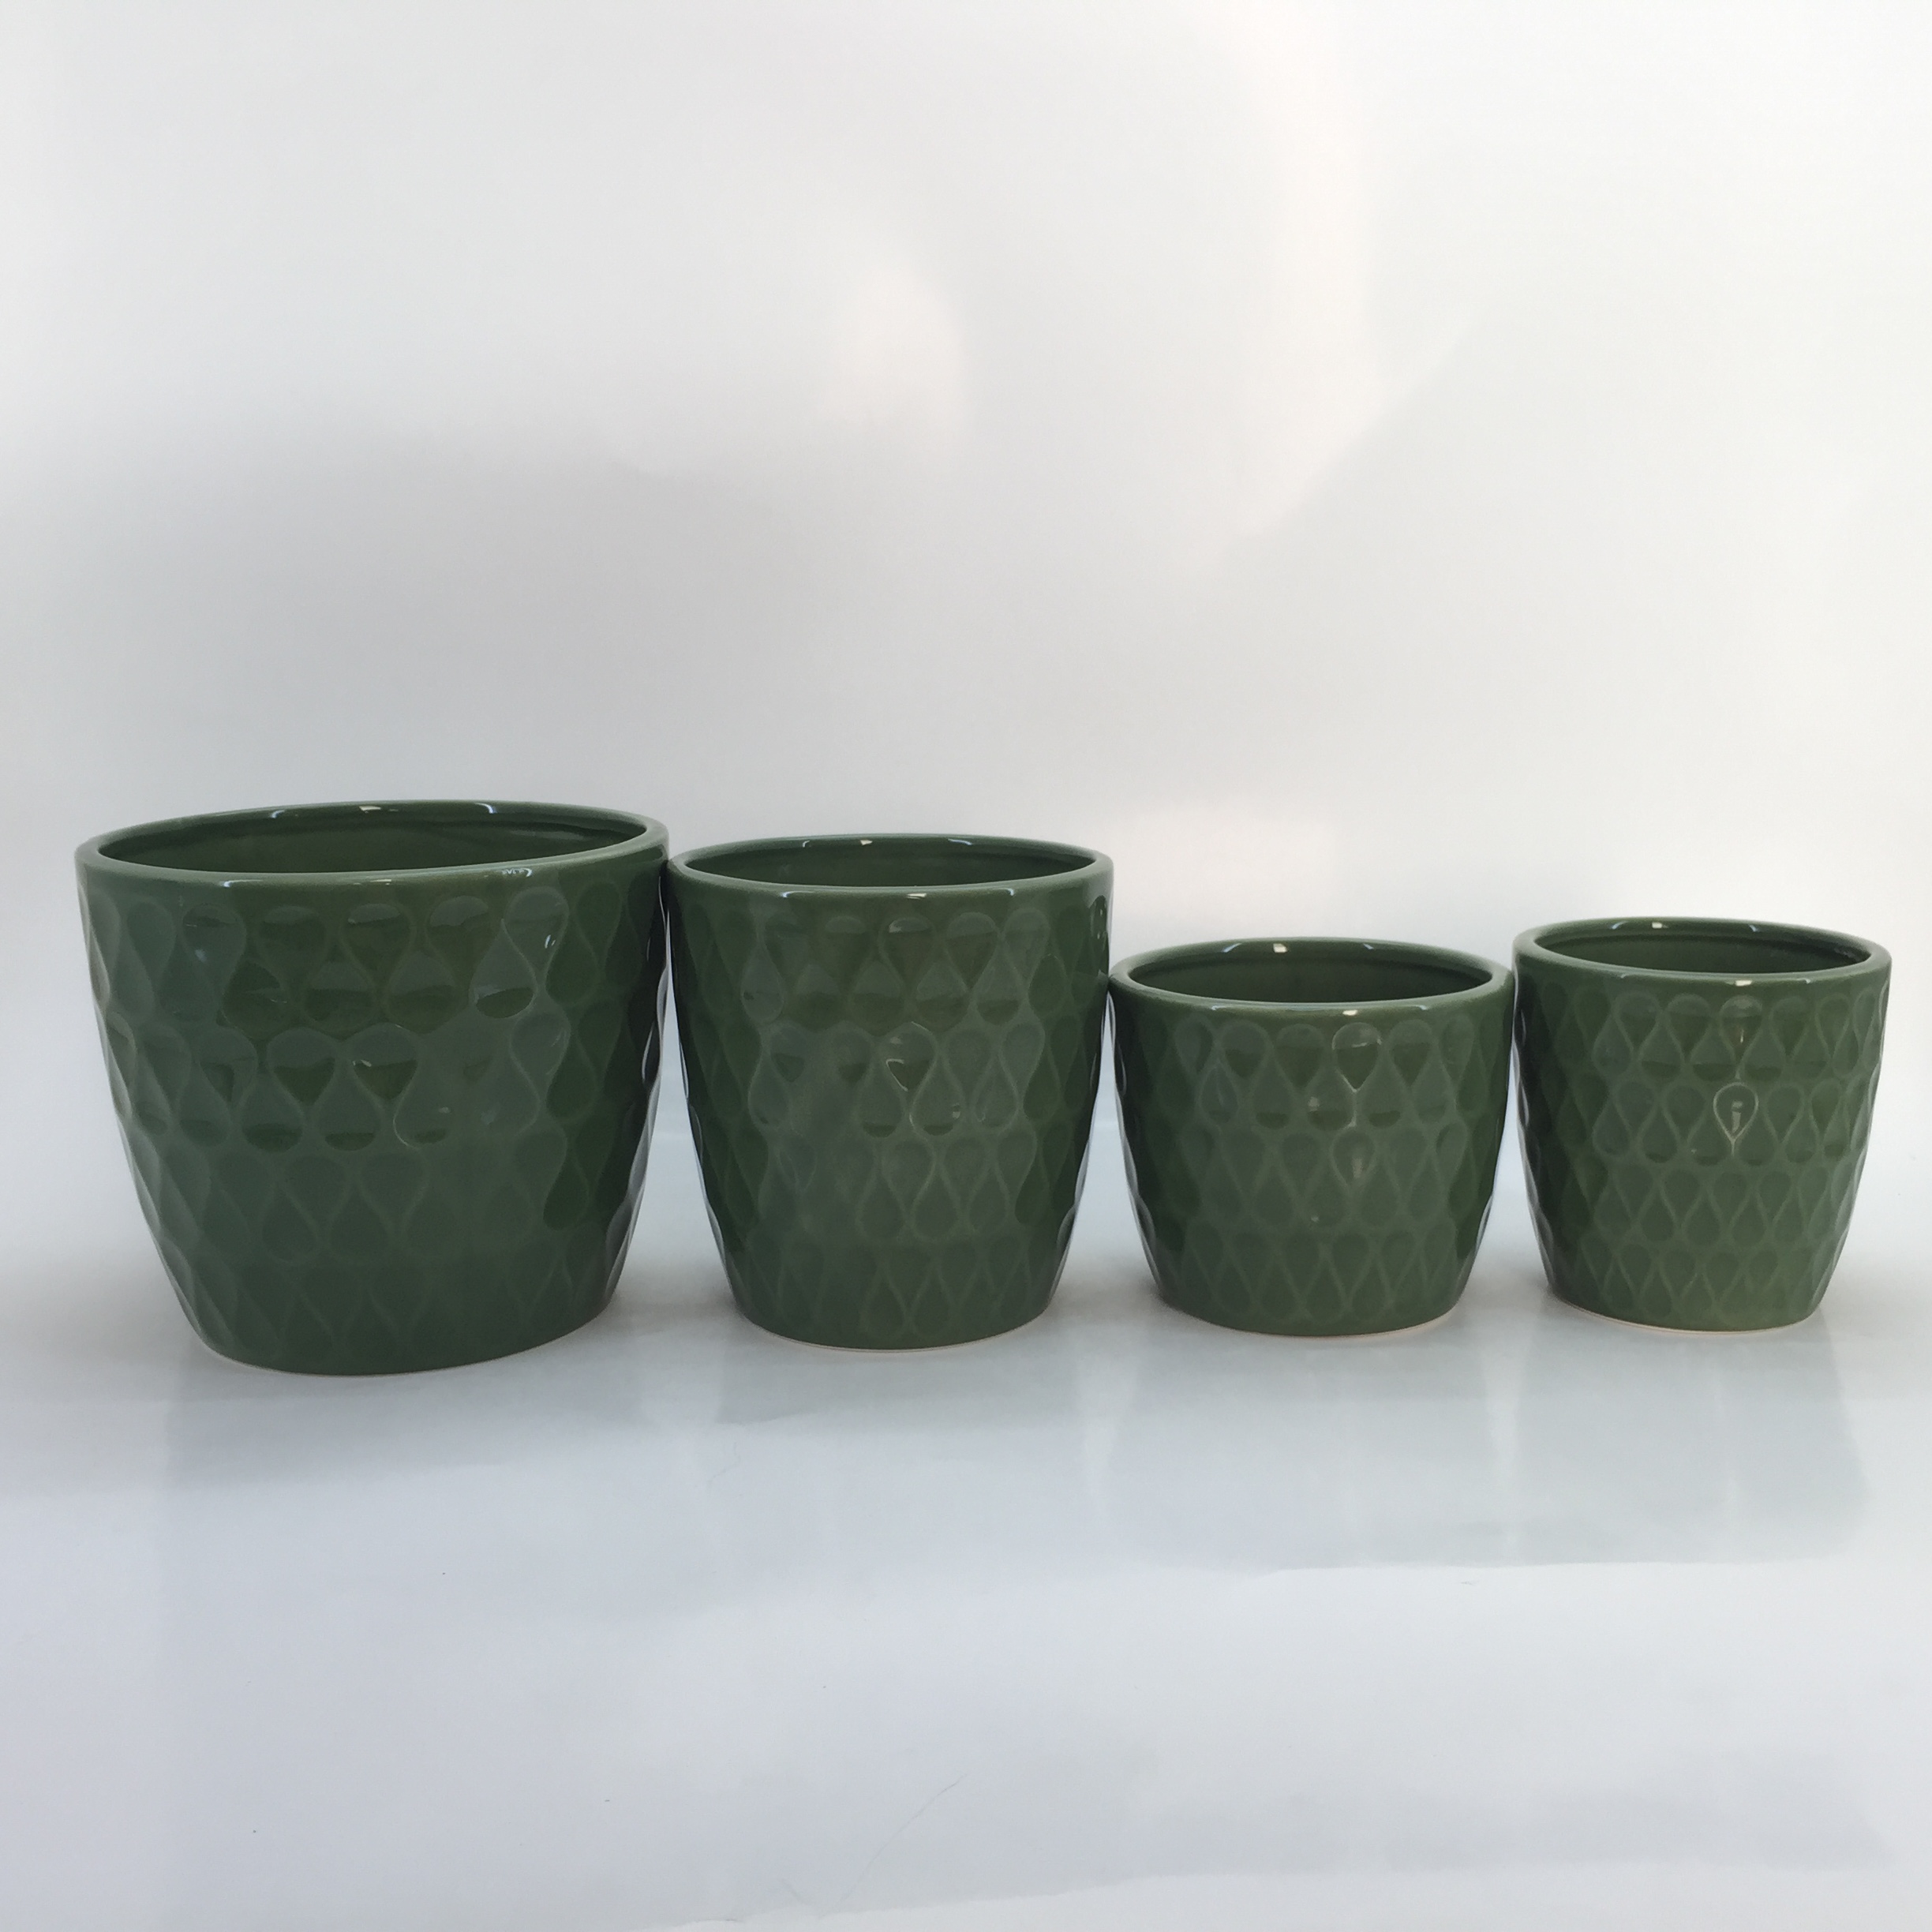 Outdoor And Indoor Decor Set of 4 Ceramic Flower Pots